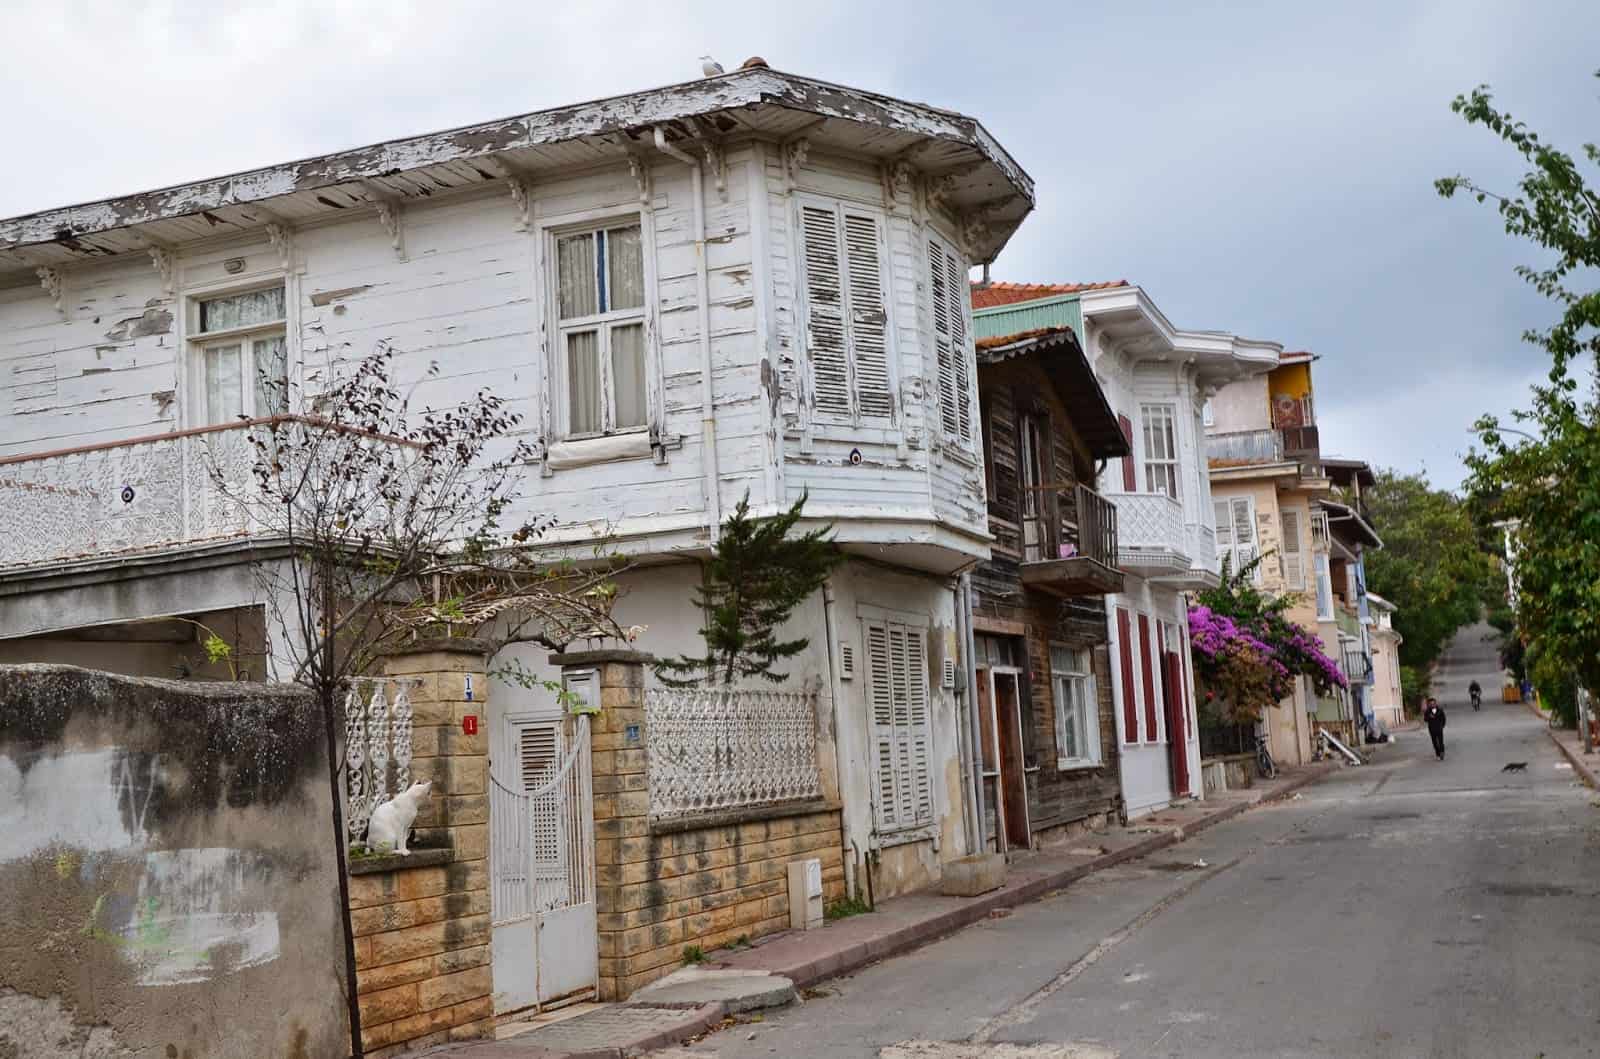 Ottoman homes on Büyükada, Istanbul, Turkey